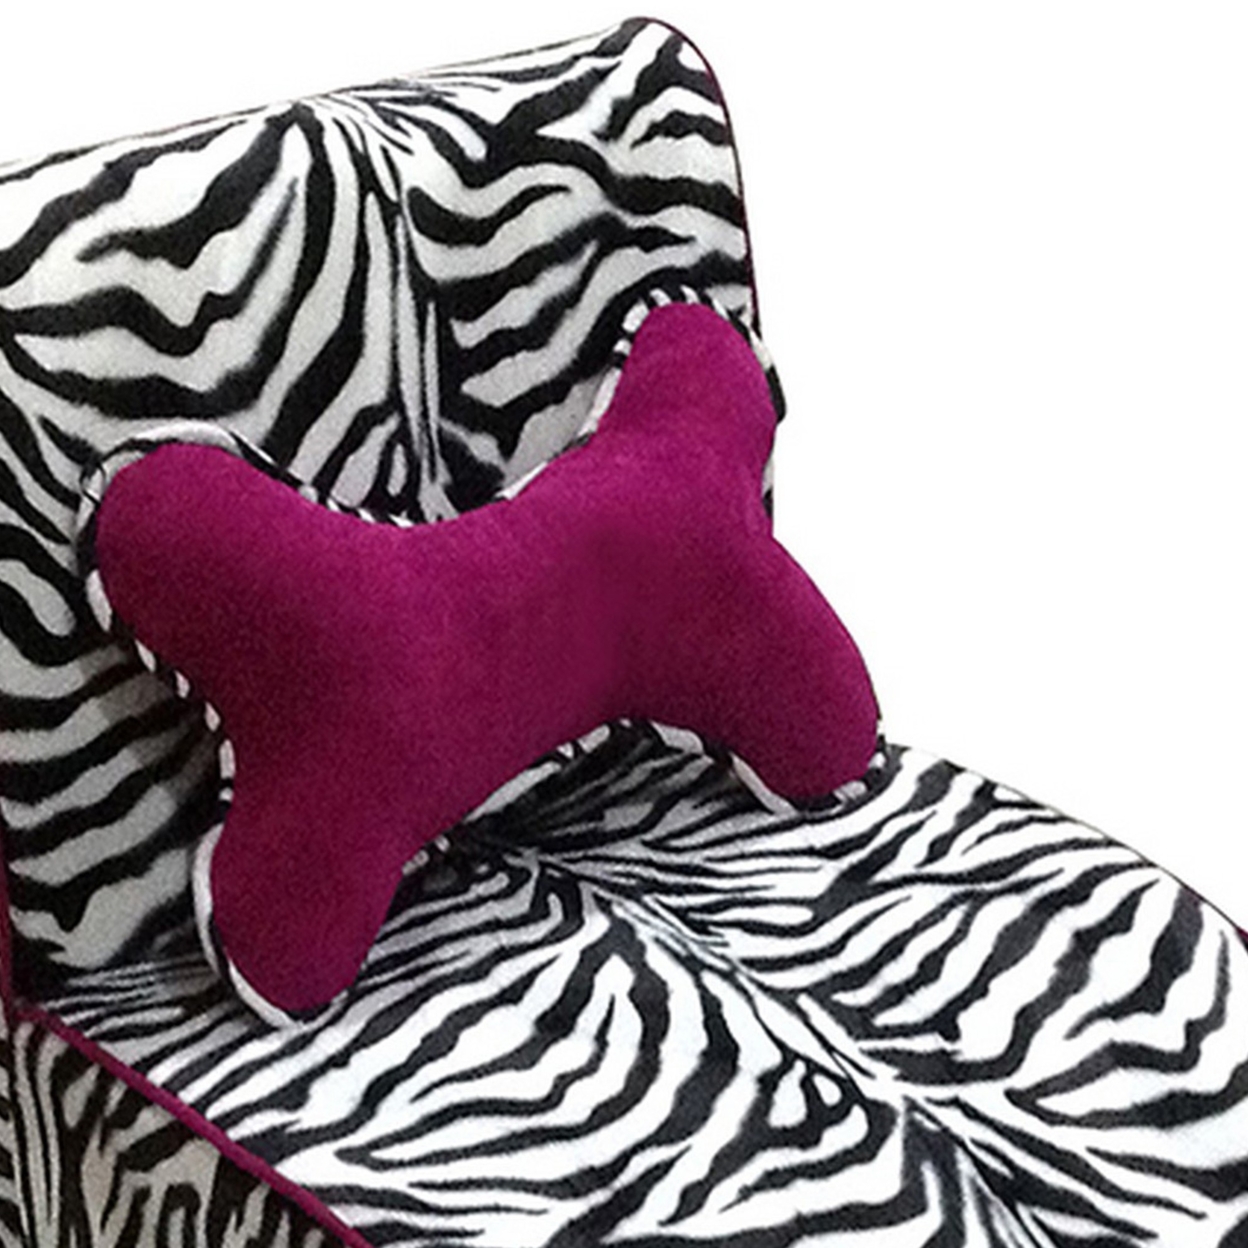 Pet Furniture With Zebra Print Fabric And Block Feet, Black And White- Saltoro Sherpi